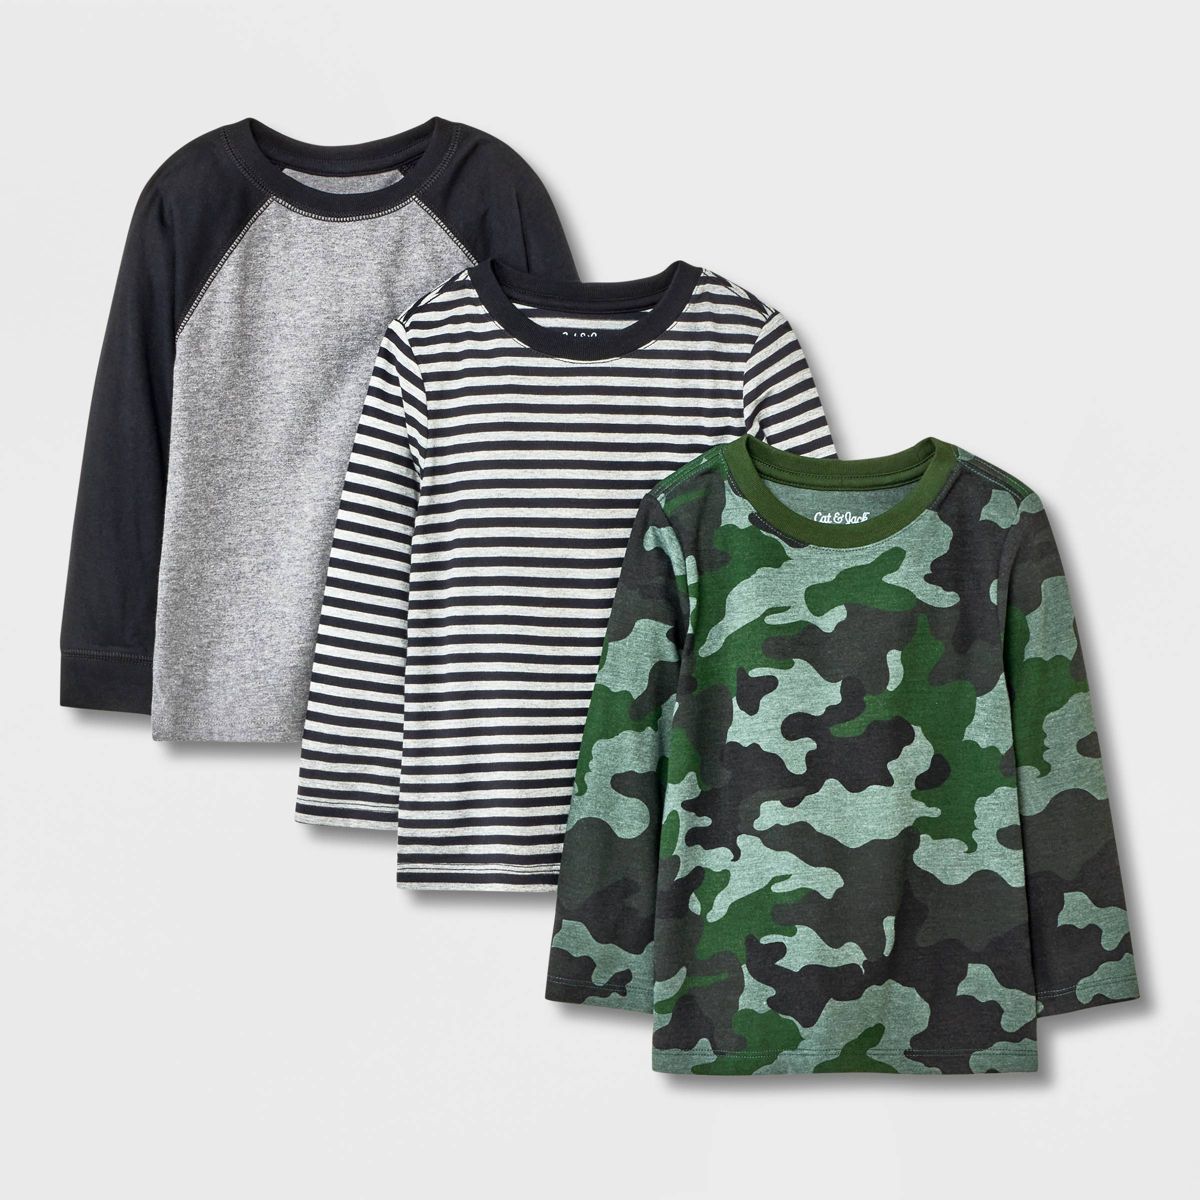 Toddler Boys' 3pk Camoflauge Long Sleeve Shirt - Cat & Jack™ Gray/Black | Target